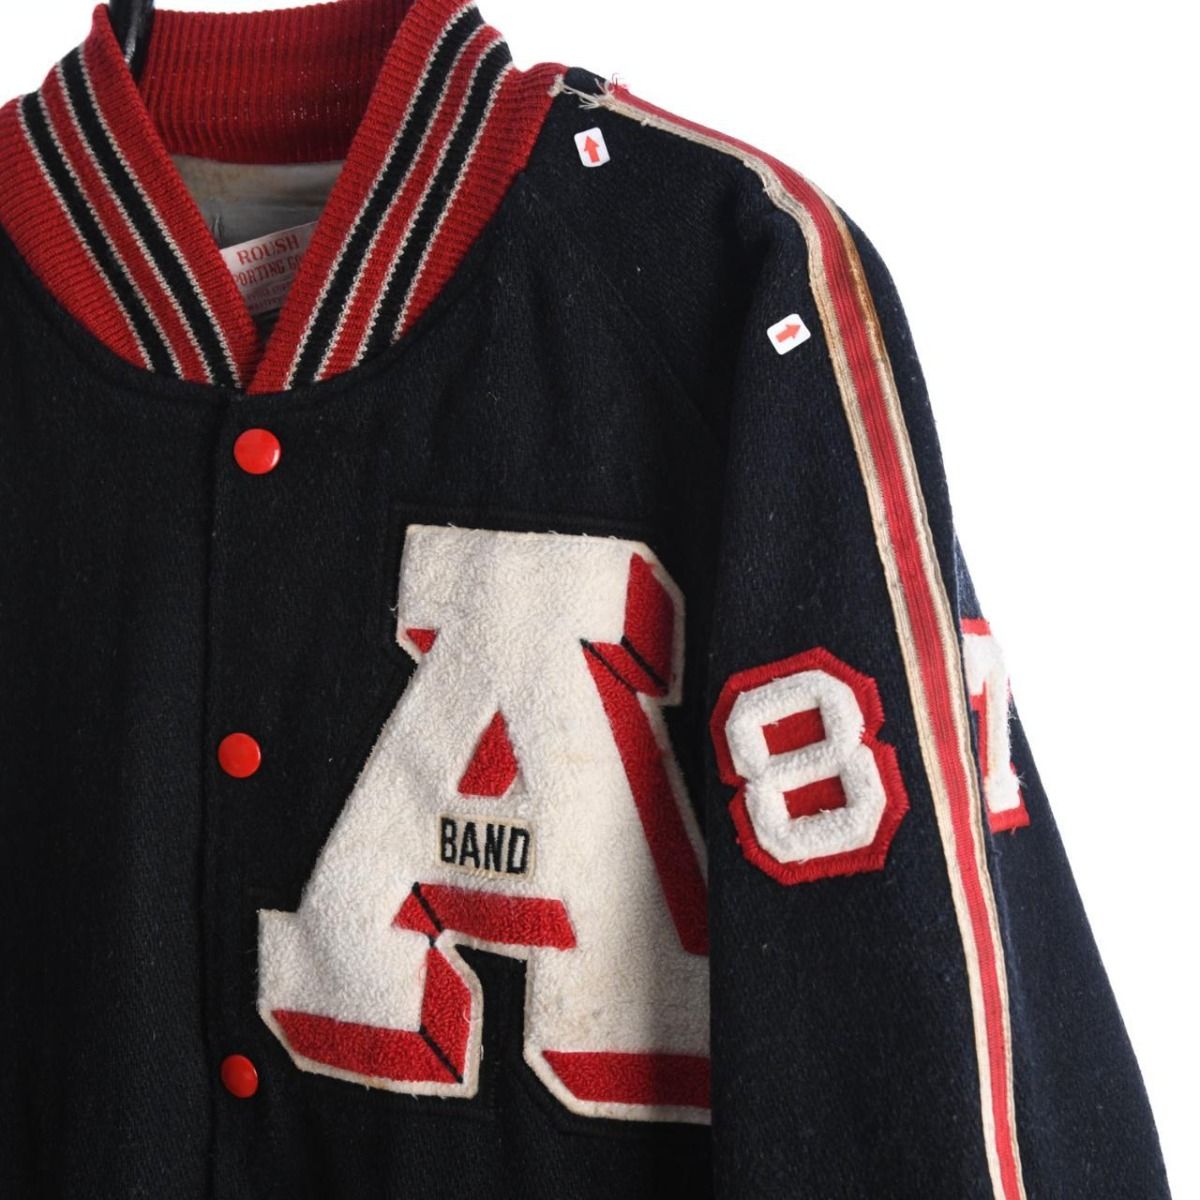 Jonathan Alder, 1980s College Varsity Jacket